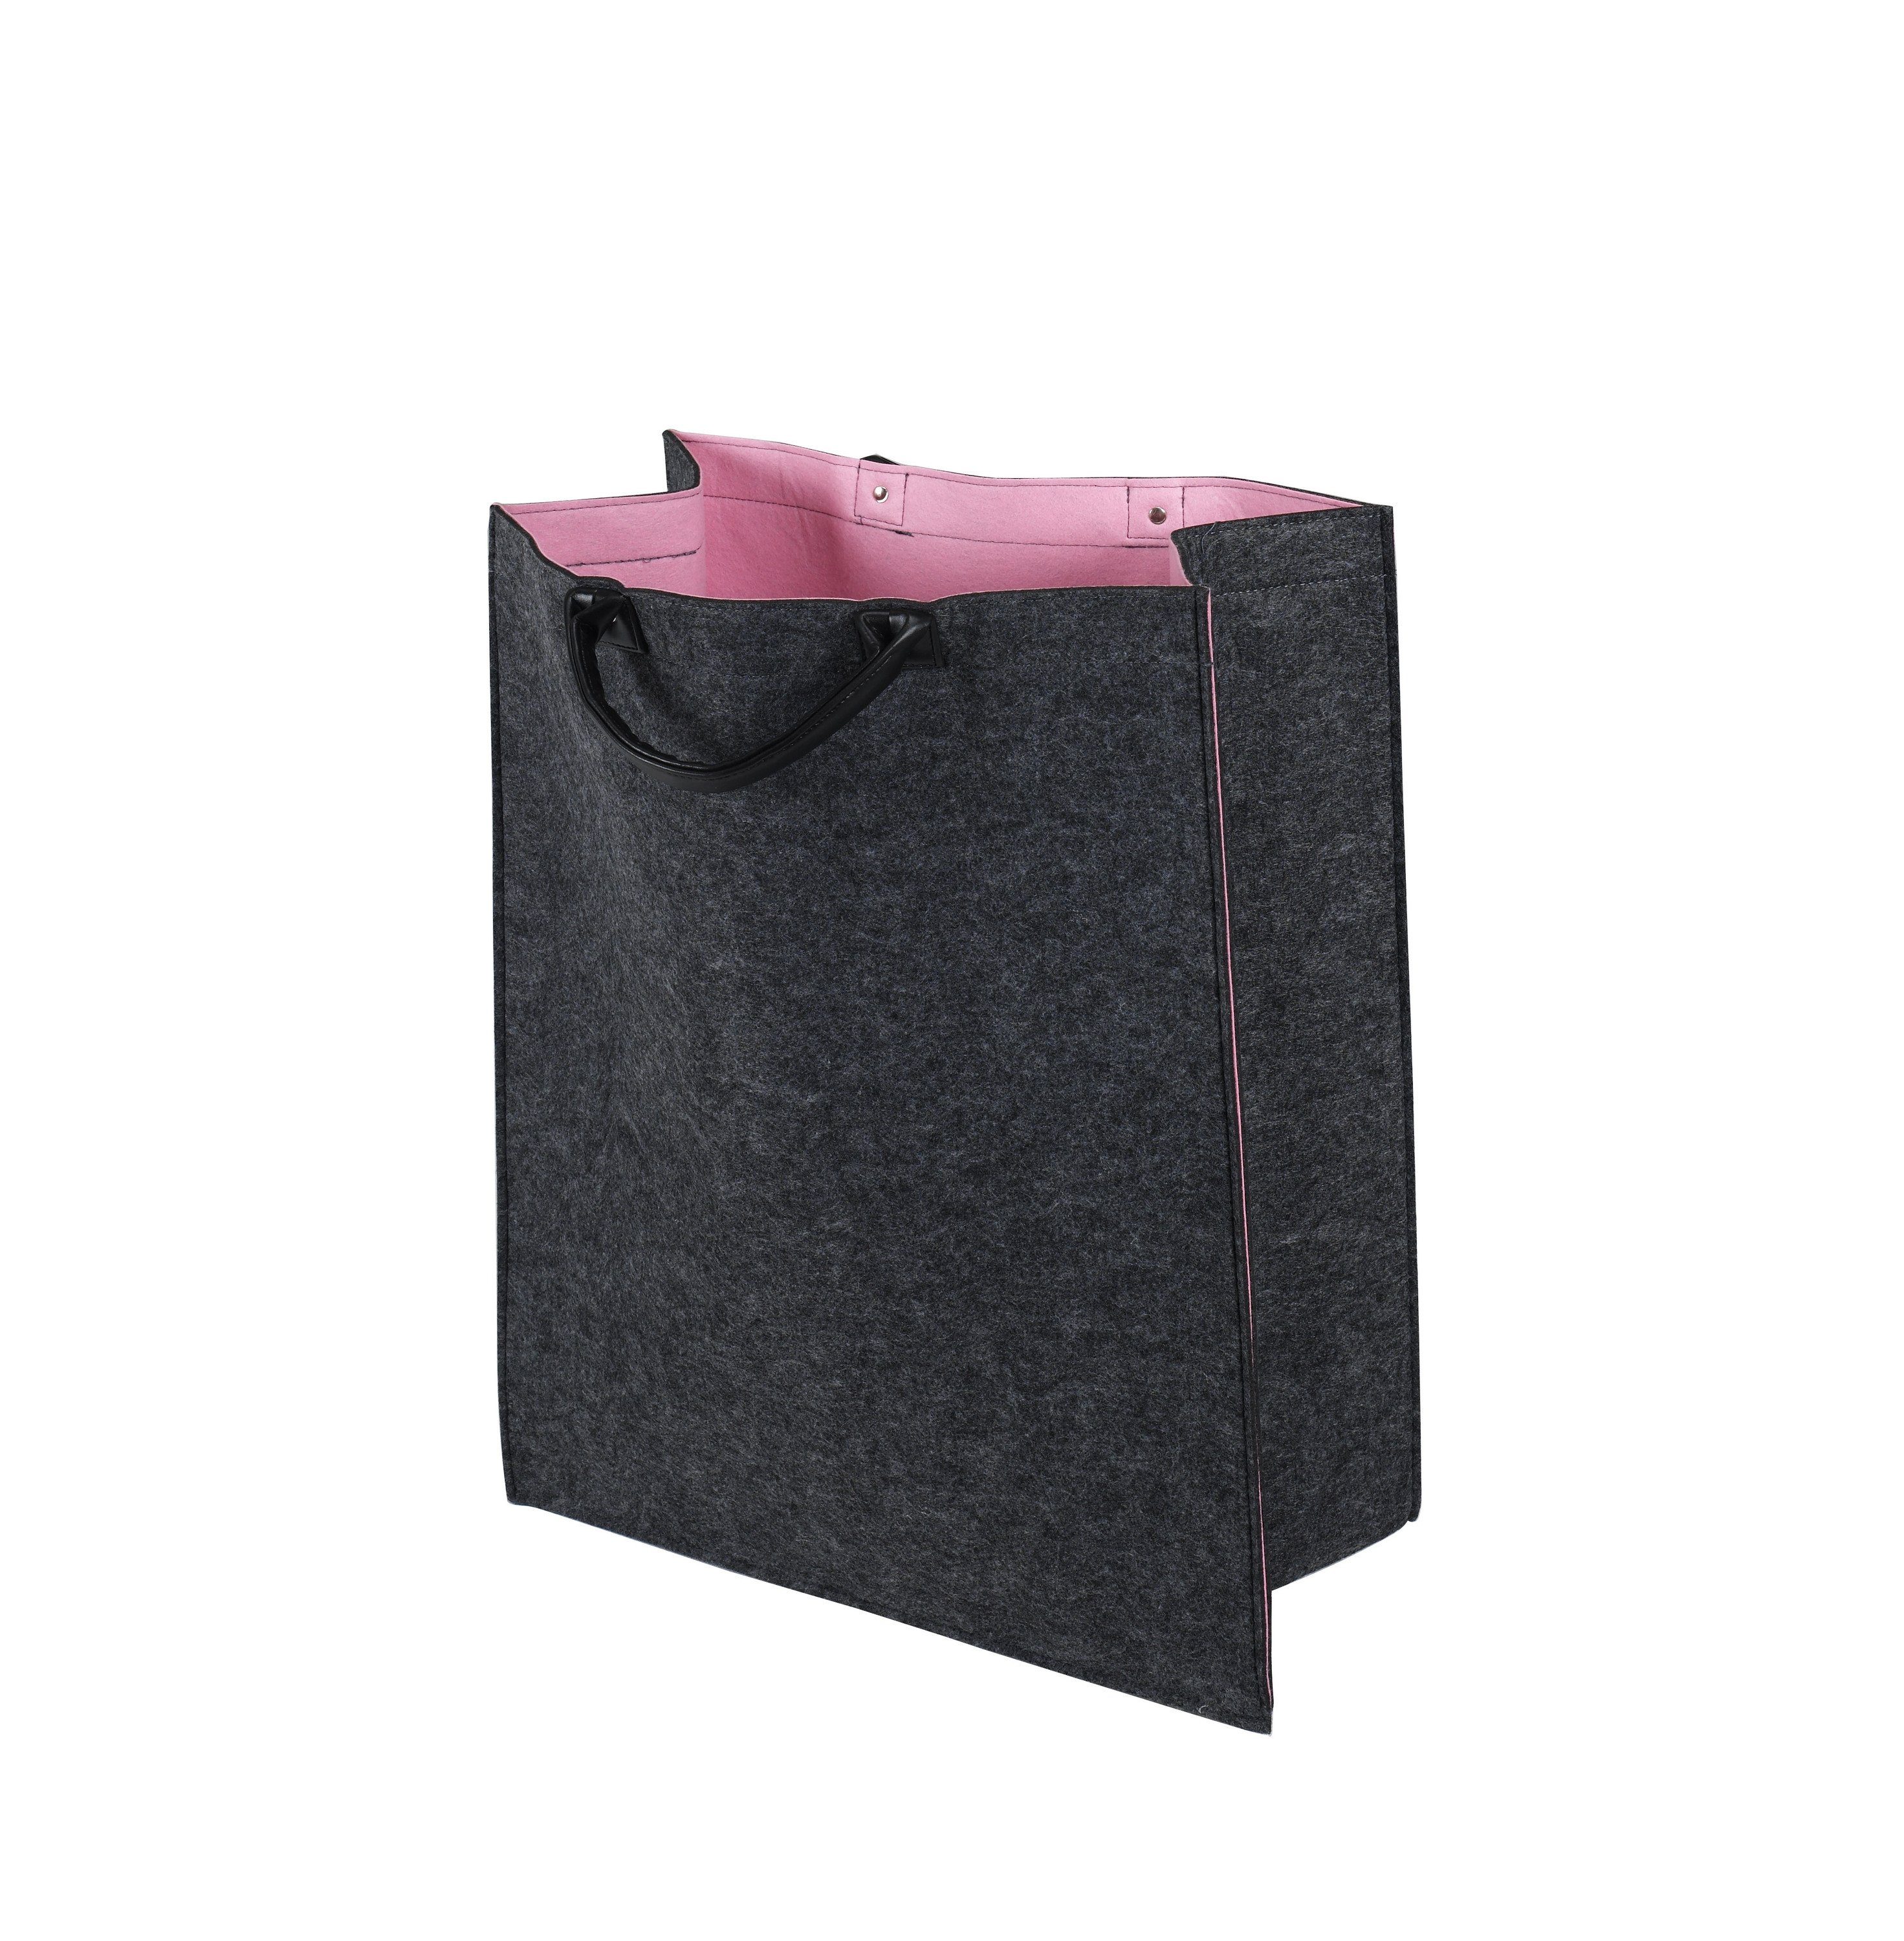 Kaminholzkorb Wäschebox pink, (1 St), innen Wäschesack Wäschetasche Wäschesammler Wäschetaschen Filztasche grau, Multifunktionstasche ARTRA RITA